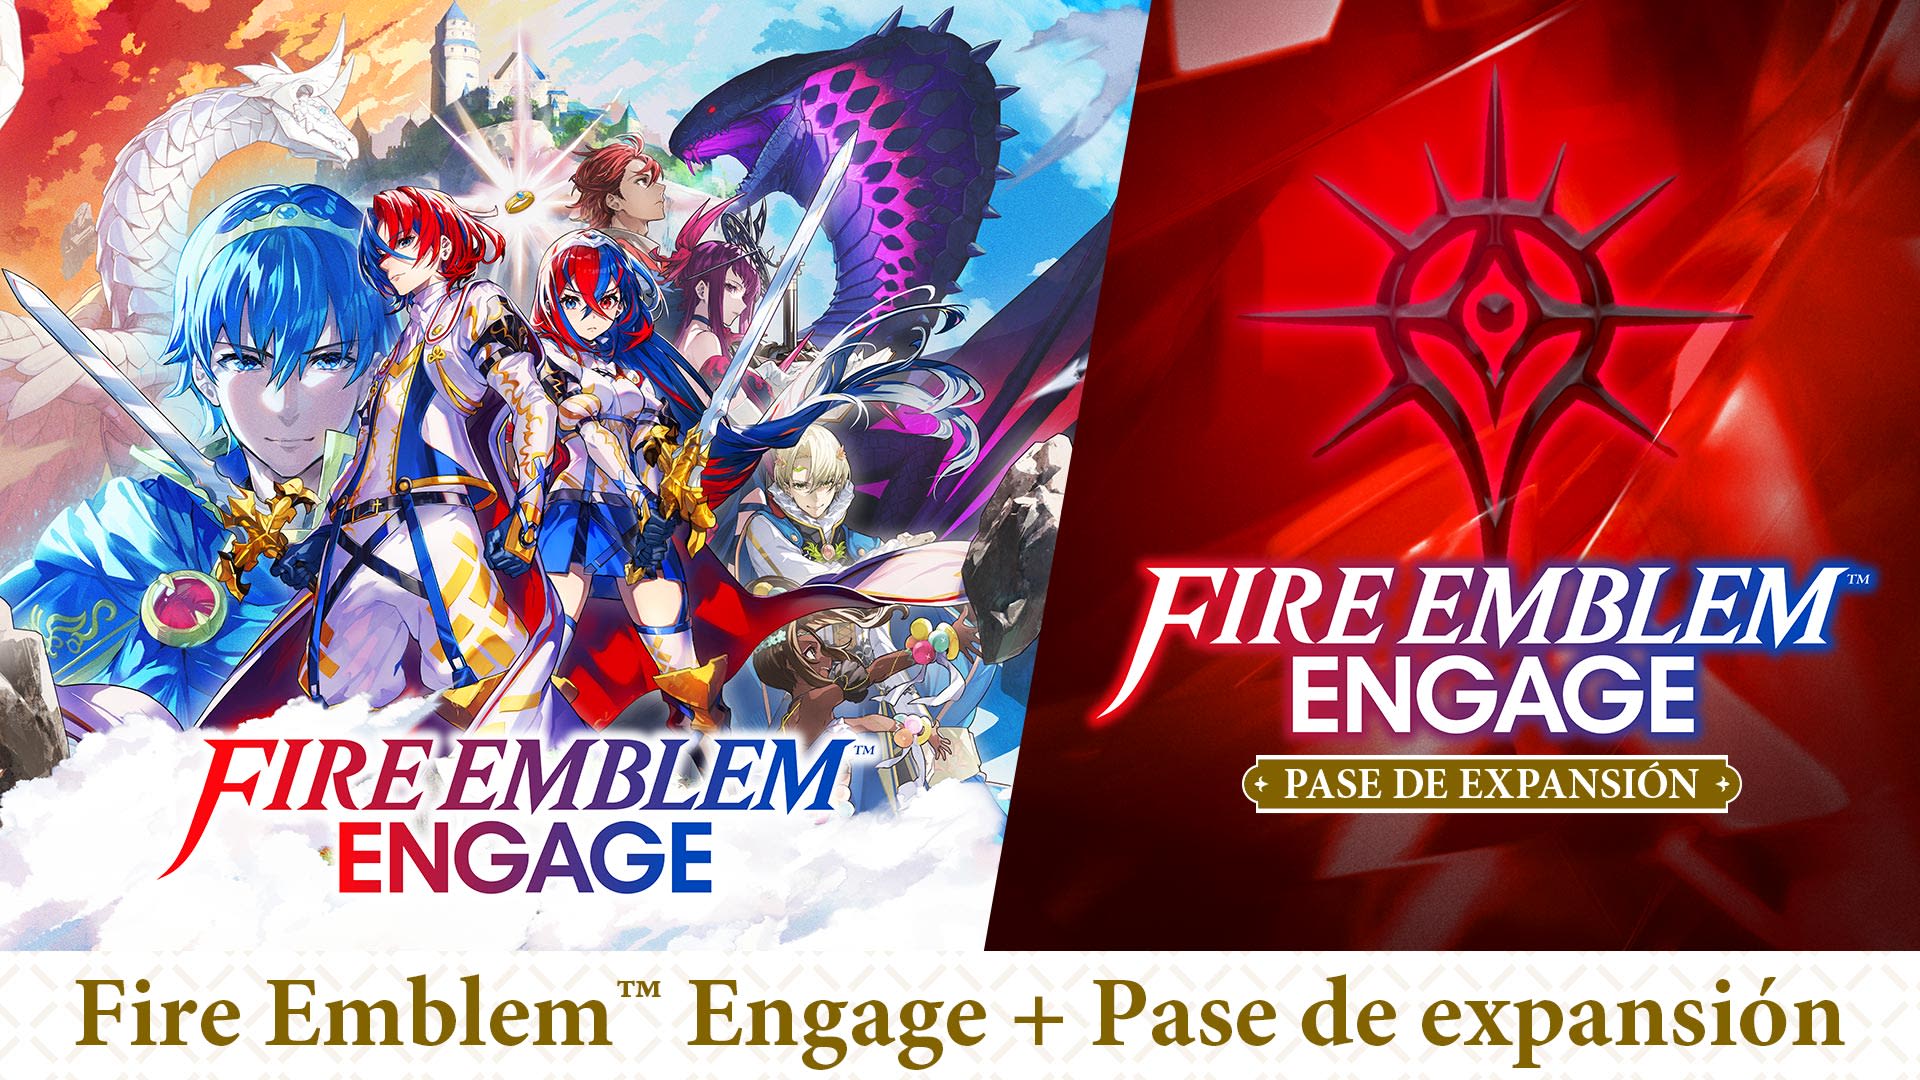 Paquete de Fire Emblem™ Engage (Juego + Pase de expansión)